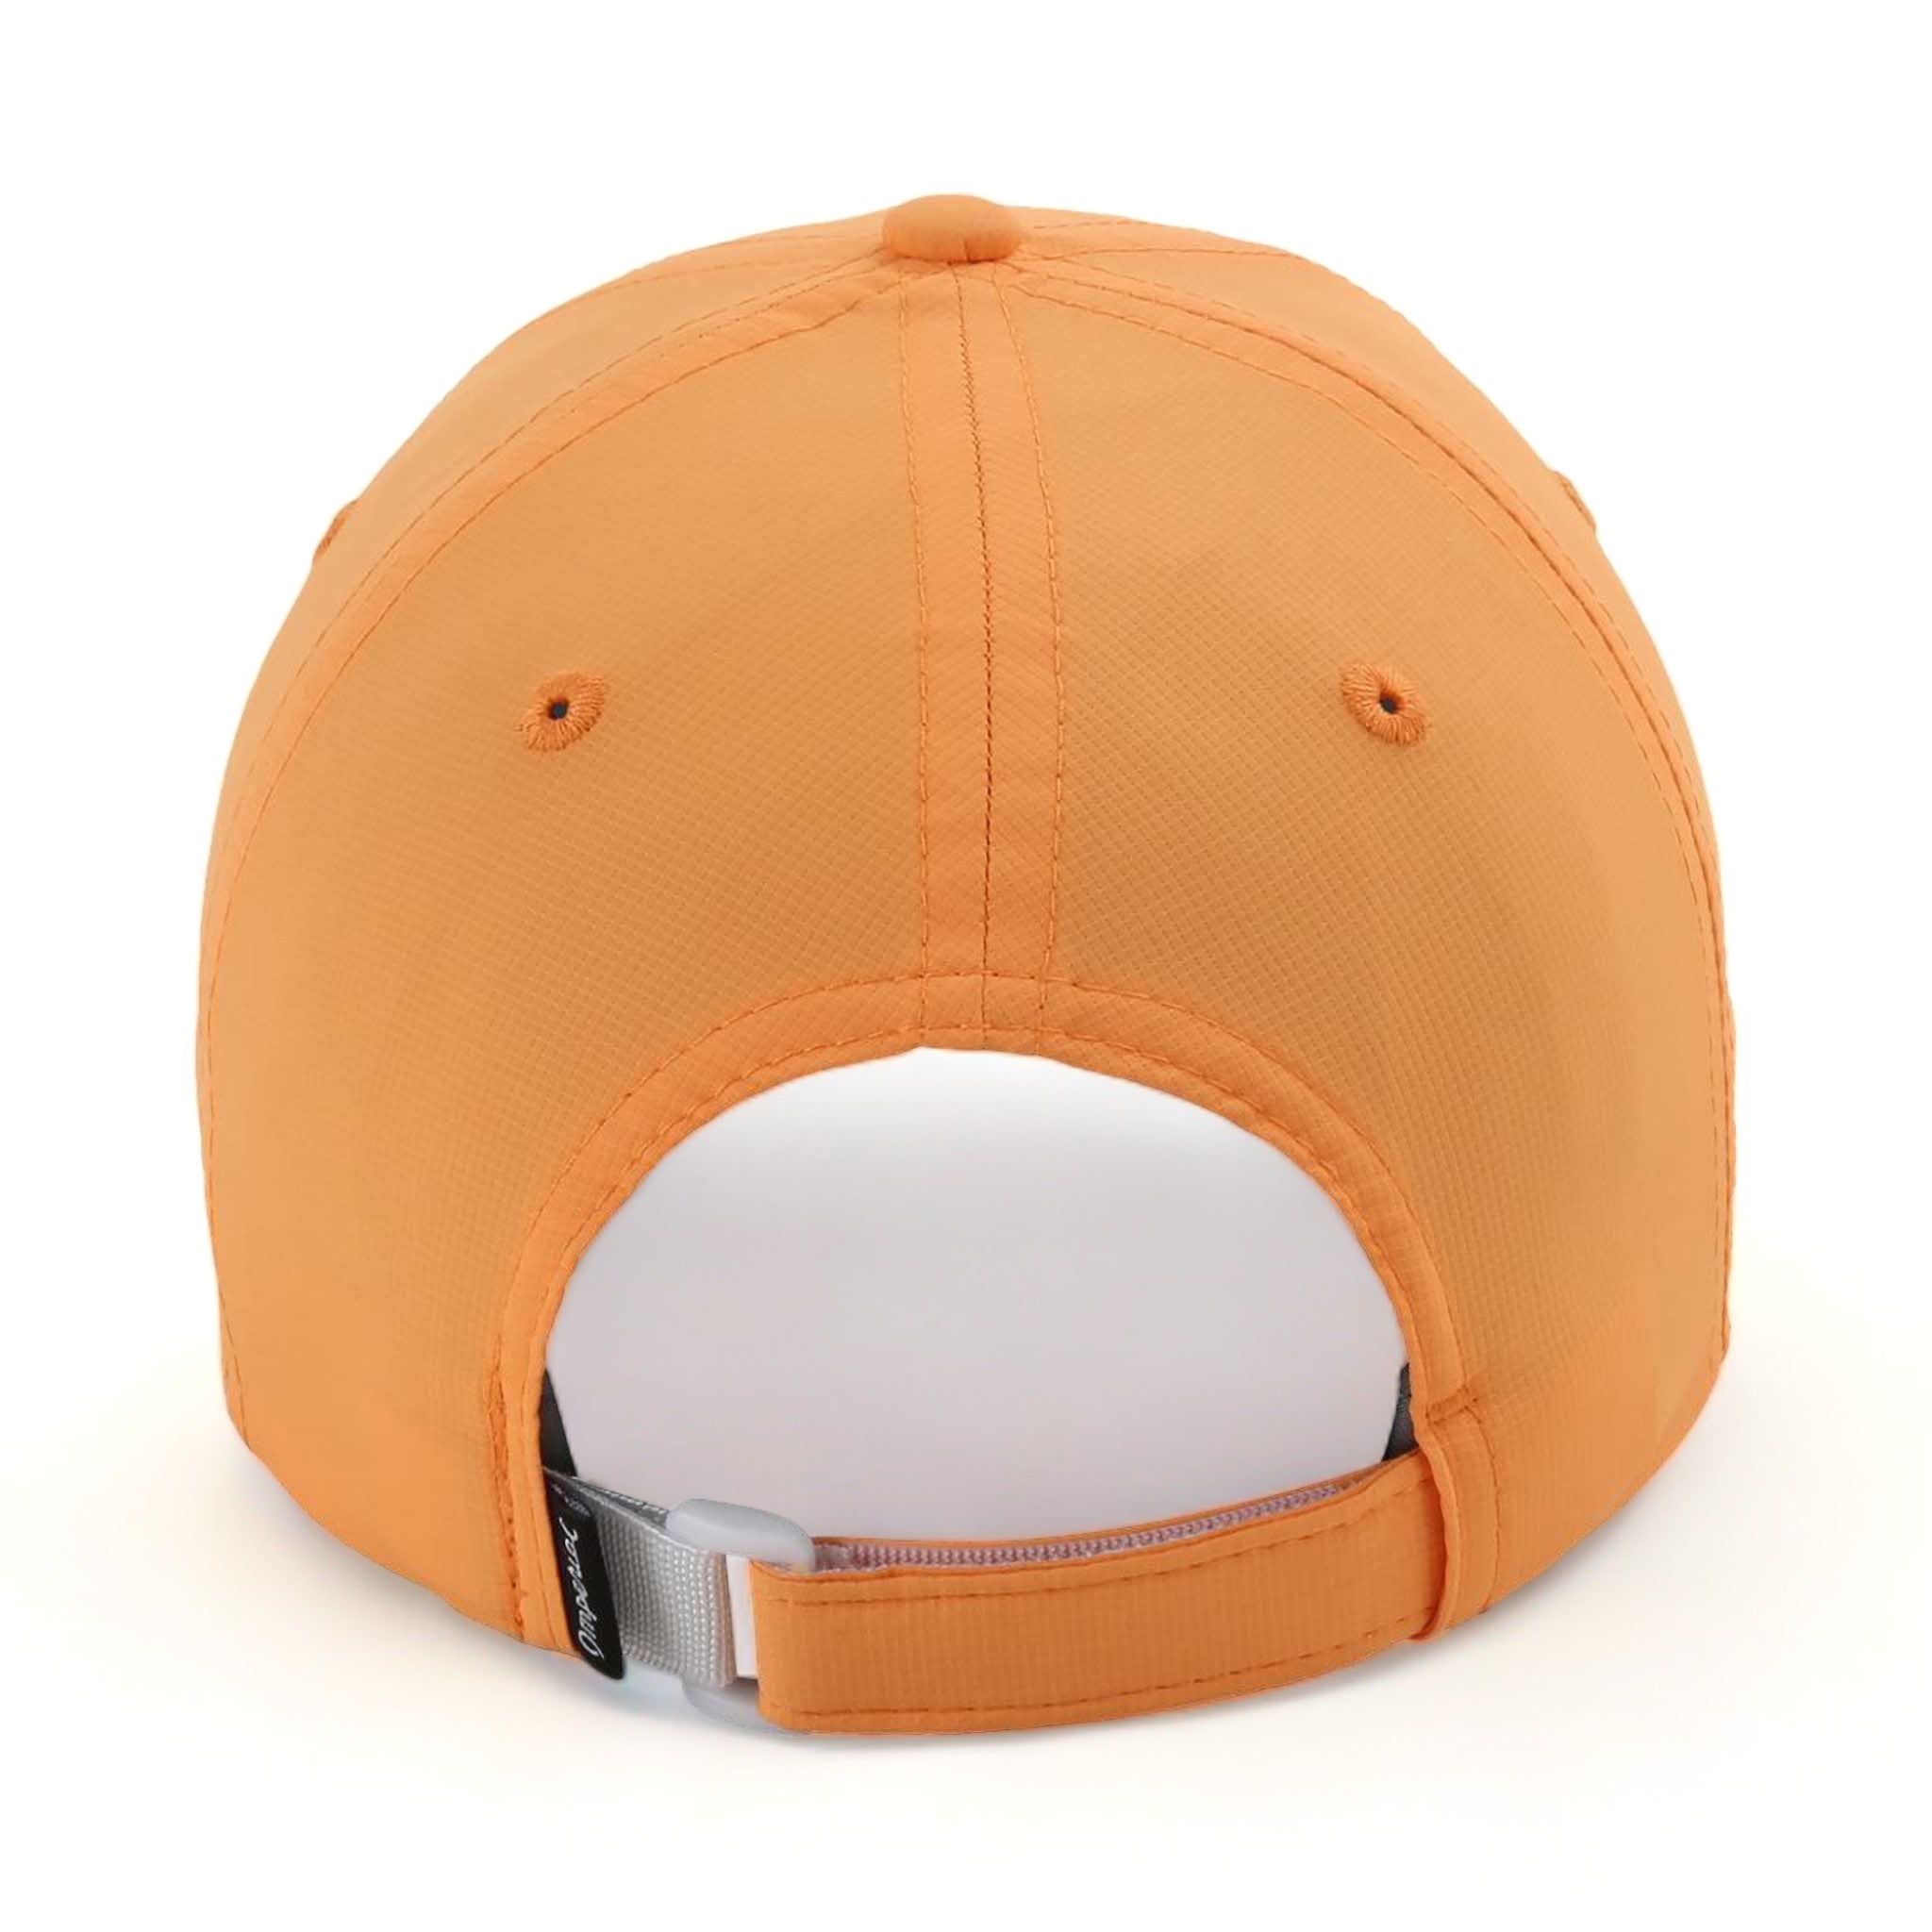 Back view of Imperial X210P custom hat in melon orange